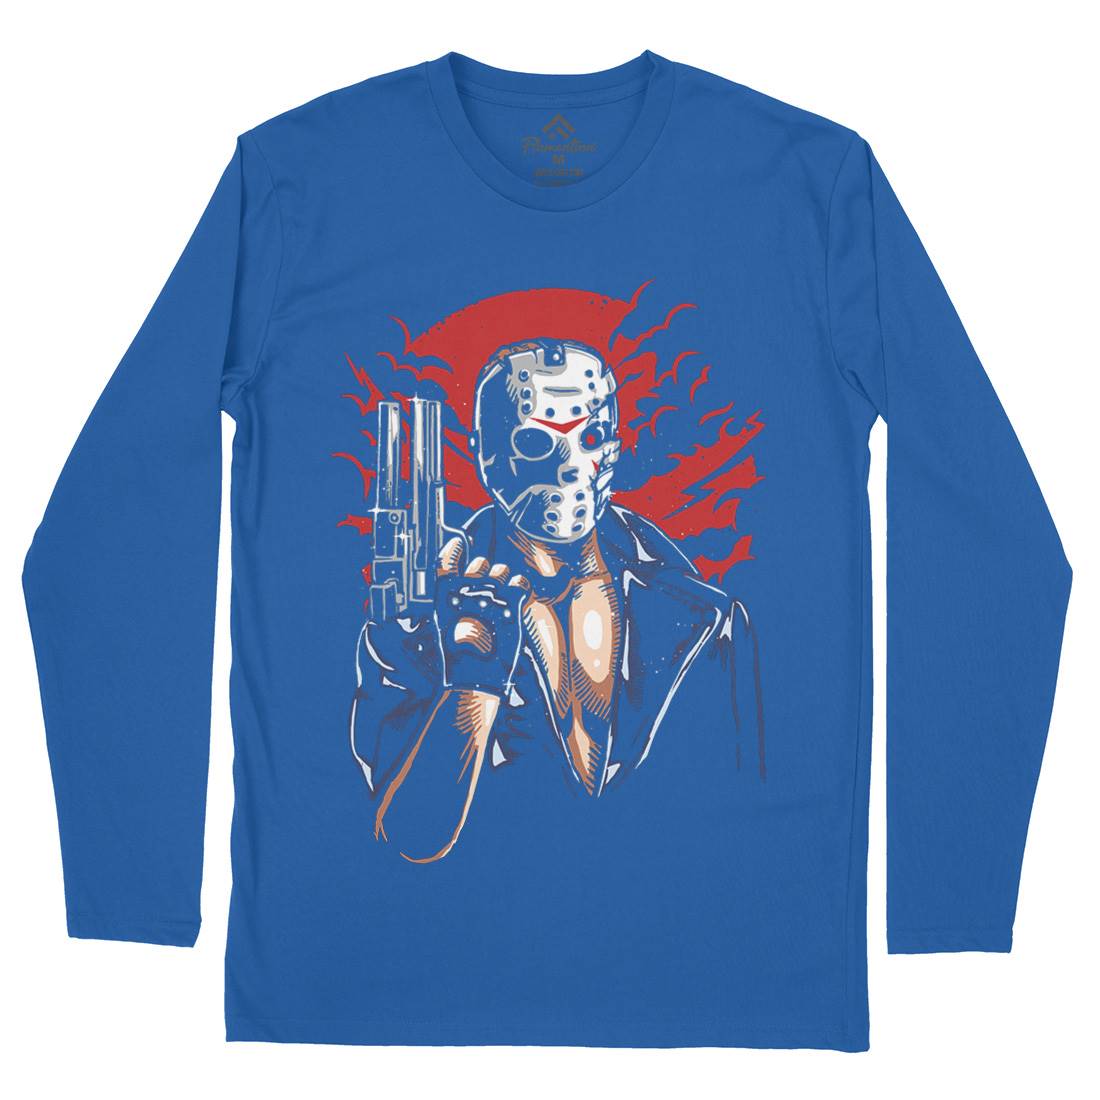 Jason Mens Long Sleeve T-Shirt Horror A548